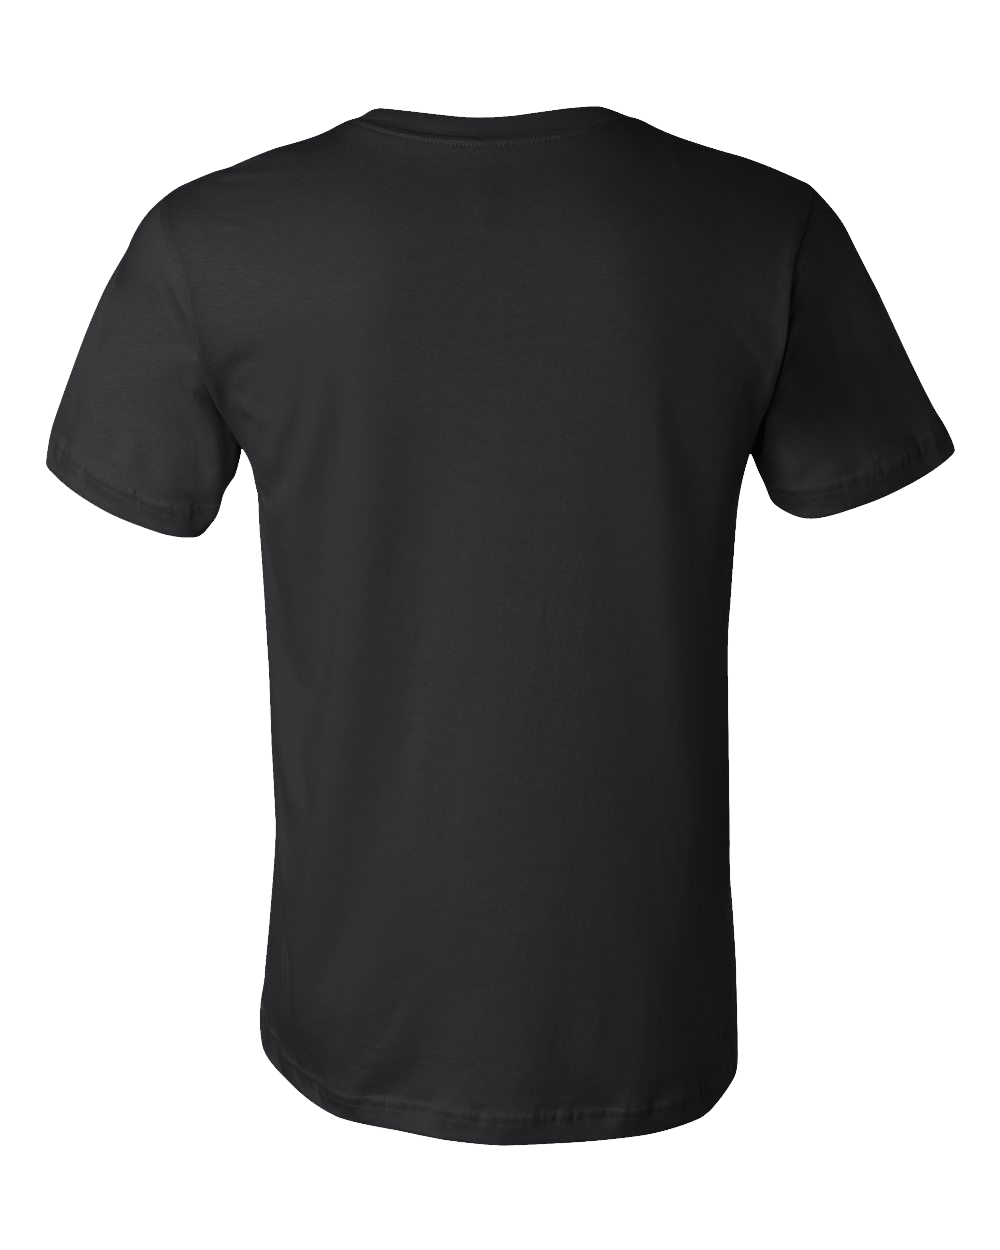 Standard Black Beaver, OK | Retro, Vintage Style Oklahoma Pride  T-shirt